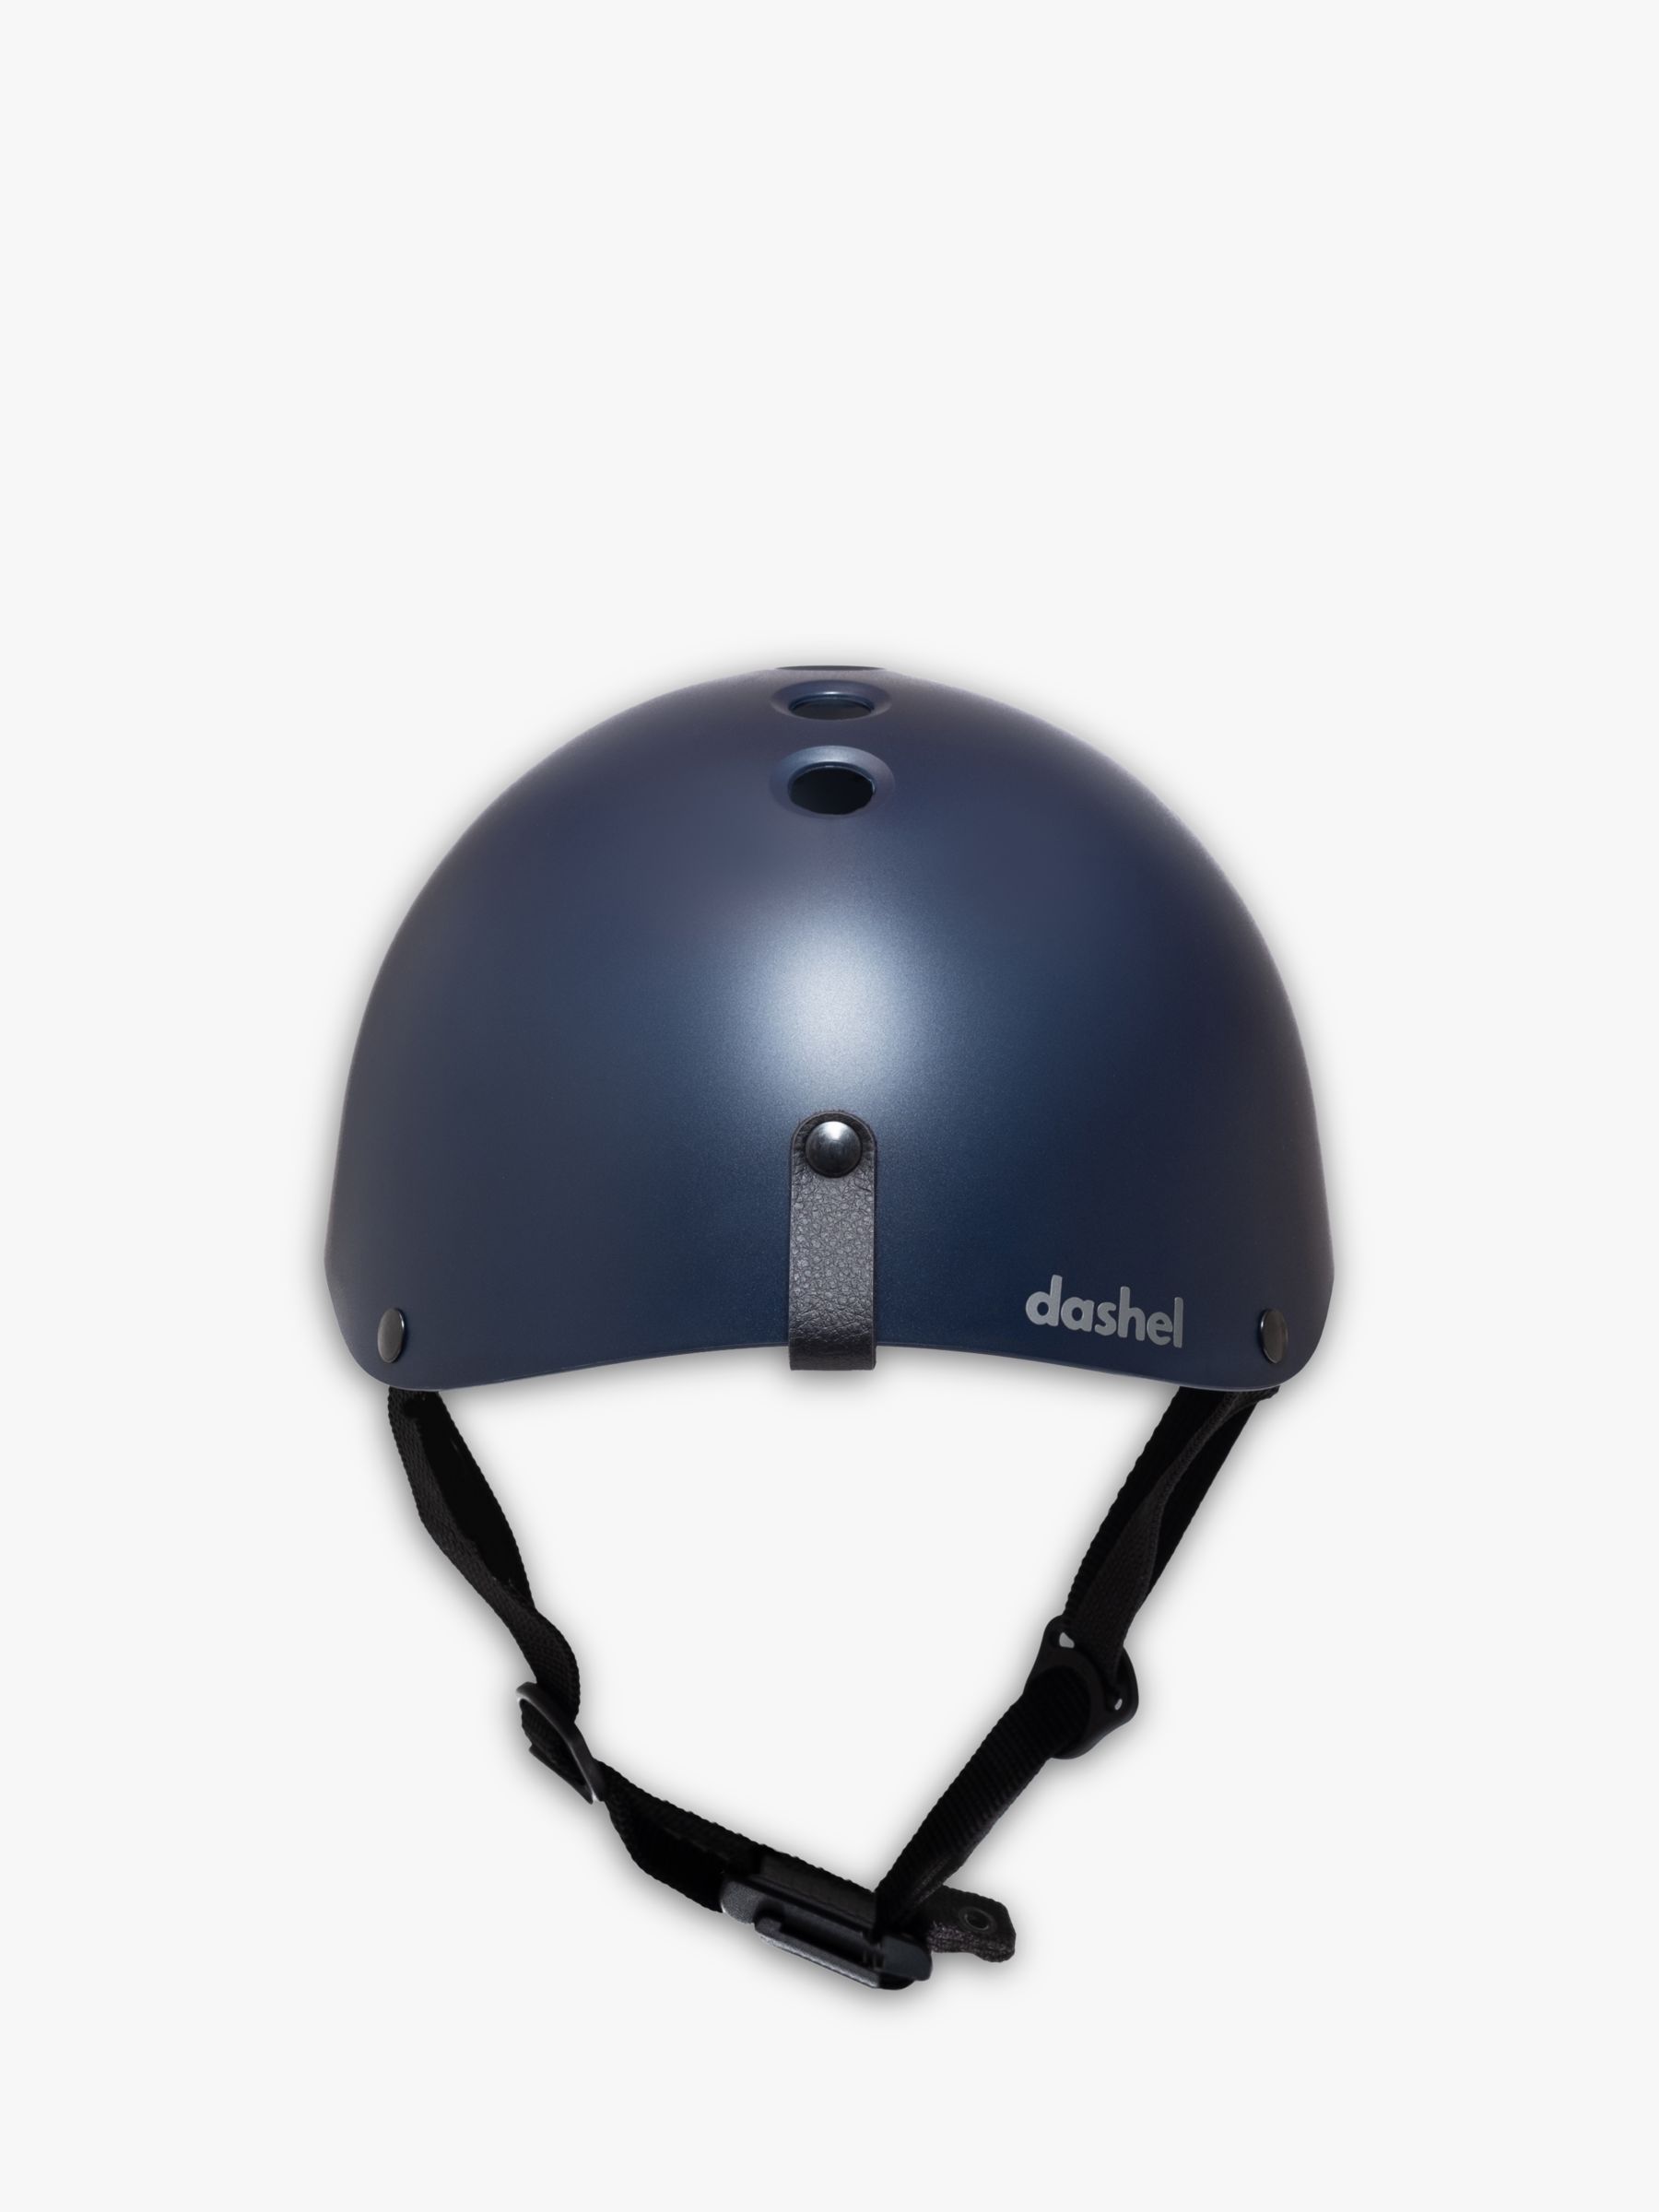 small cycle helmet